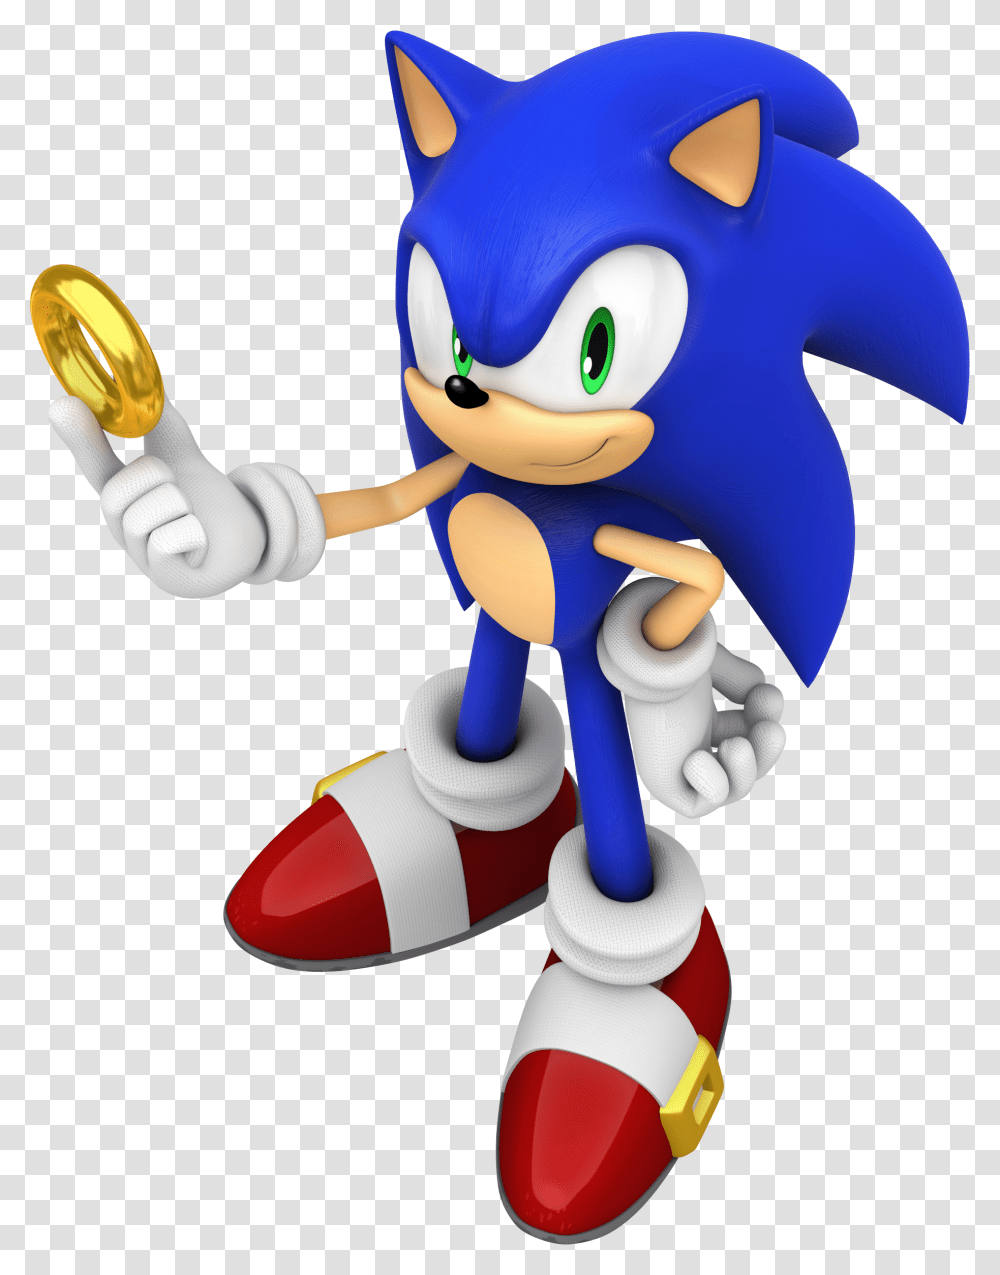 Sonic Smash Bros File Sonic The Hedgehog Render, Toy, Super Mario, Mascot, Figurine Transparent Png